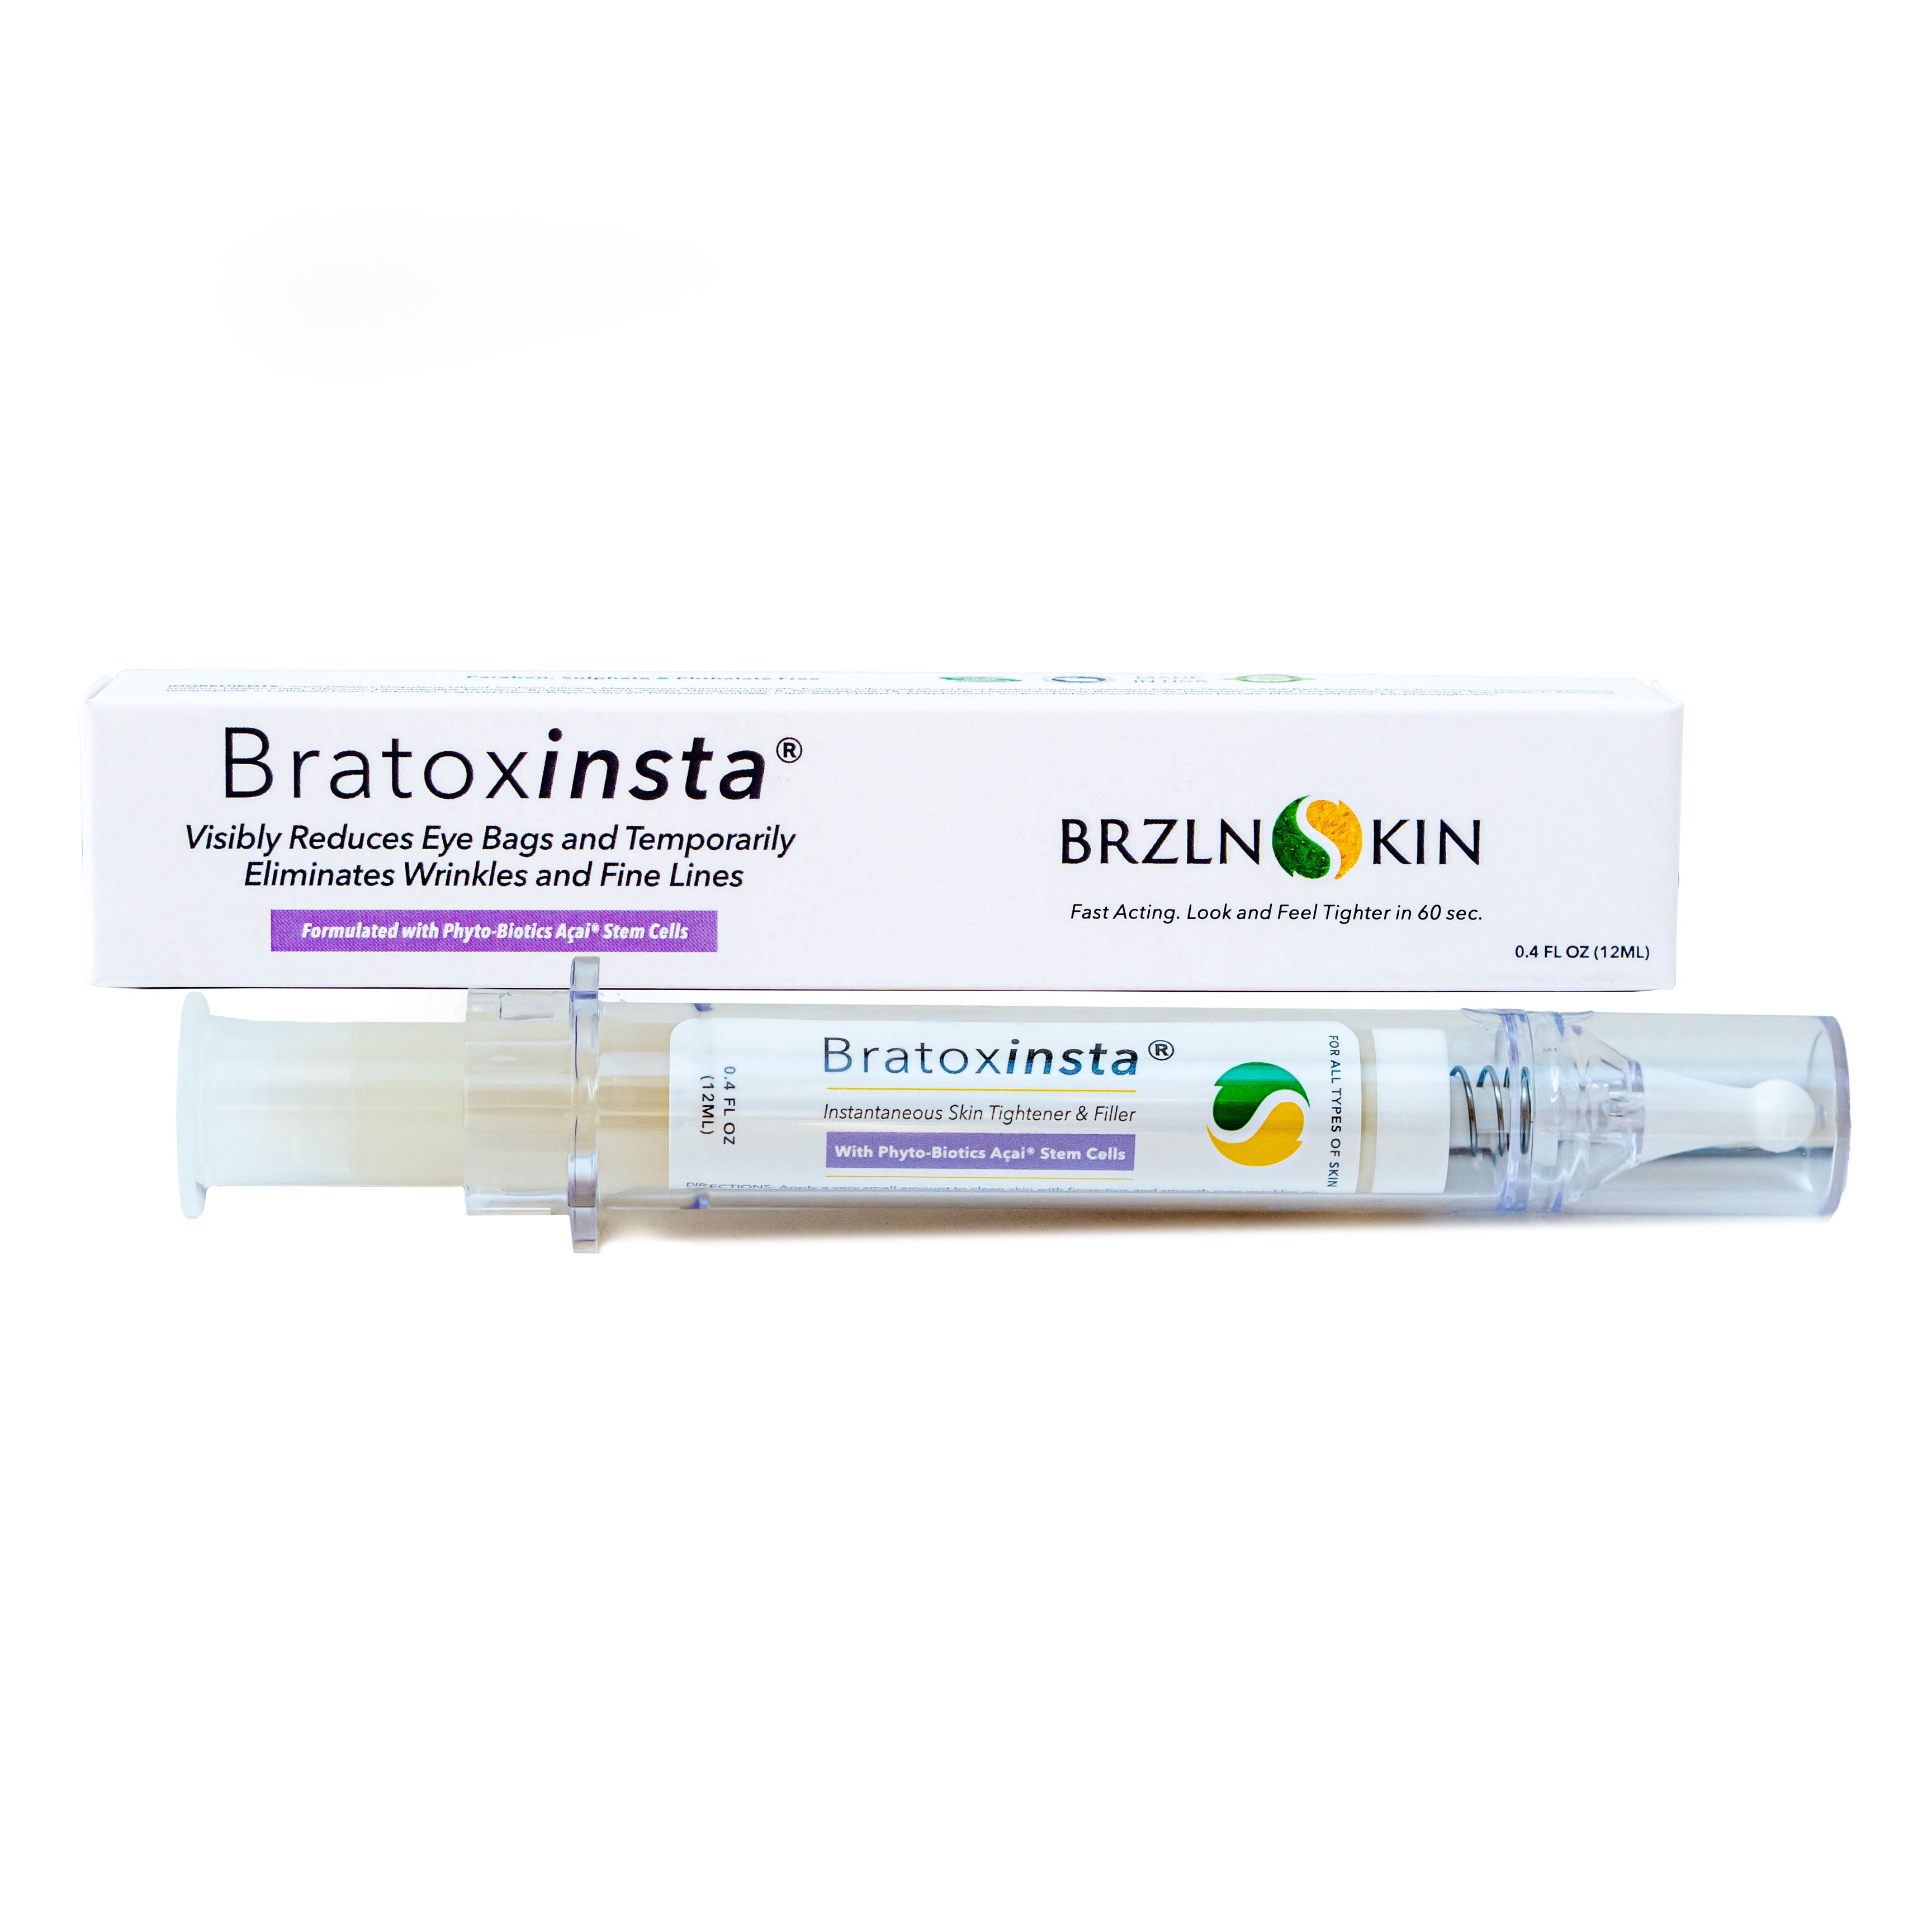 Bratoxinsta product image